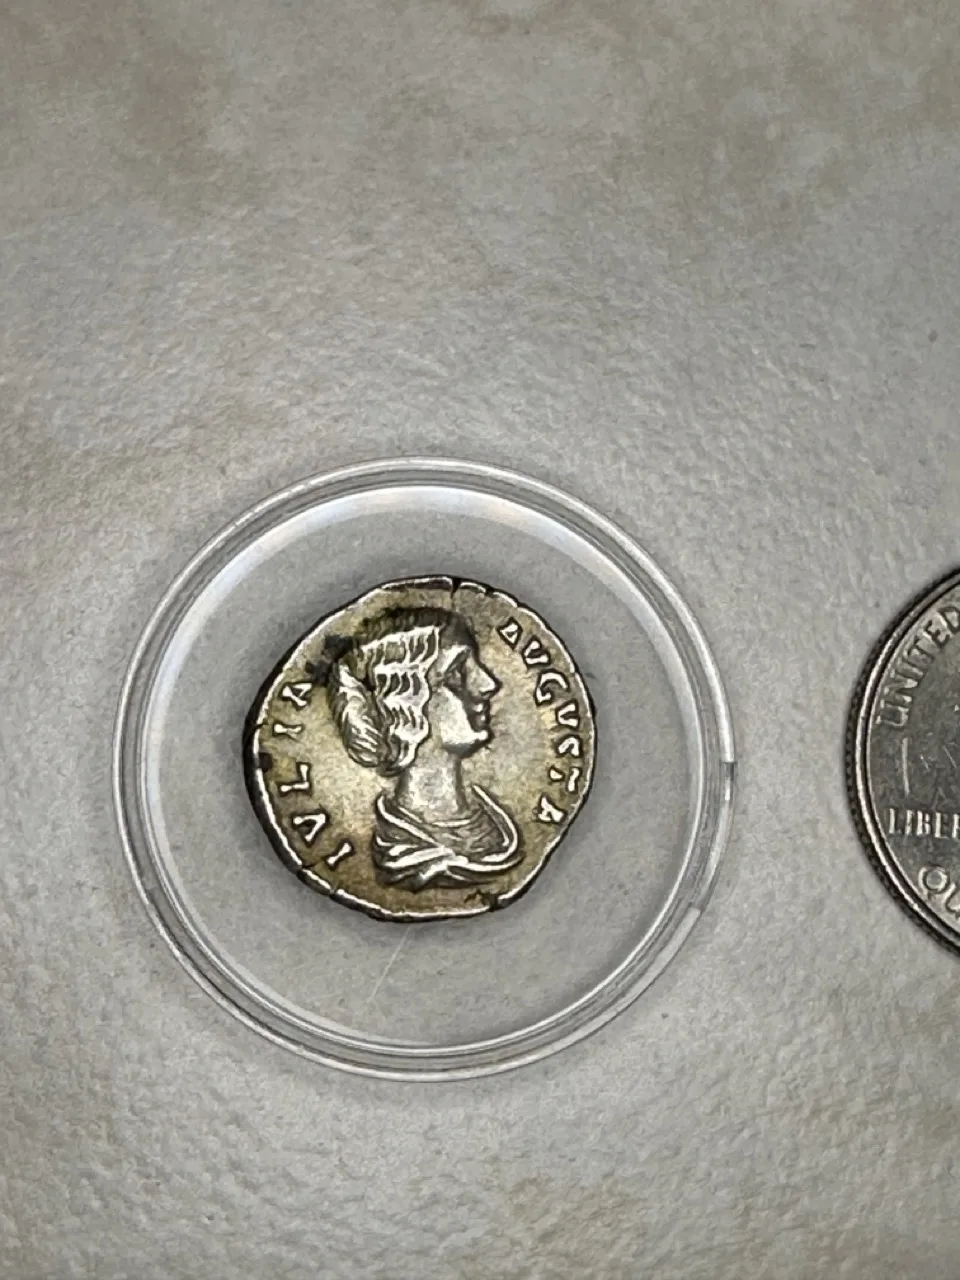 Roman silver Denarii coin, ancient currency Prehistoric Online